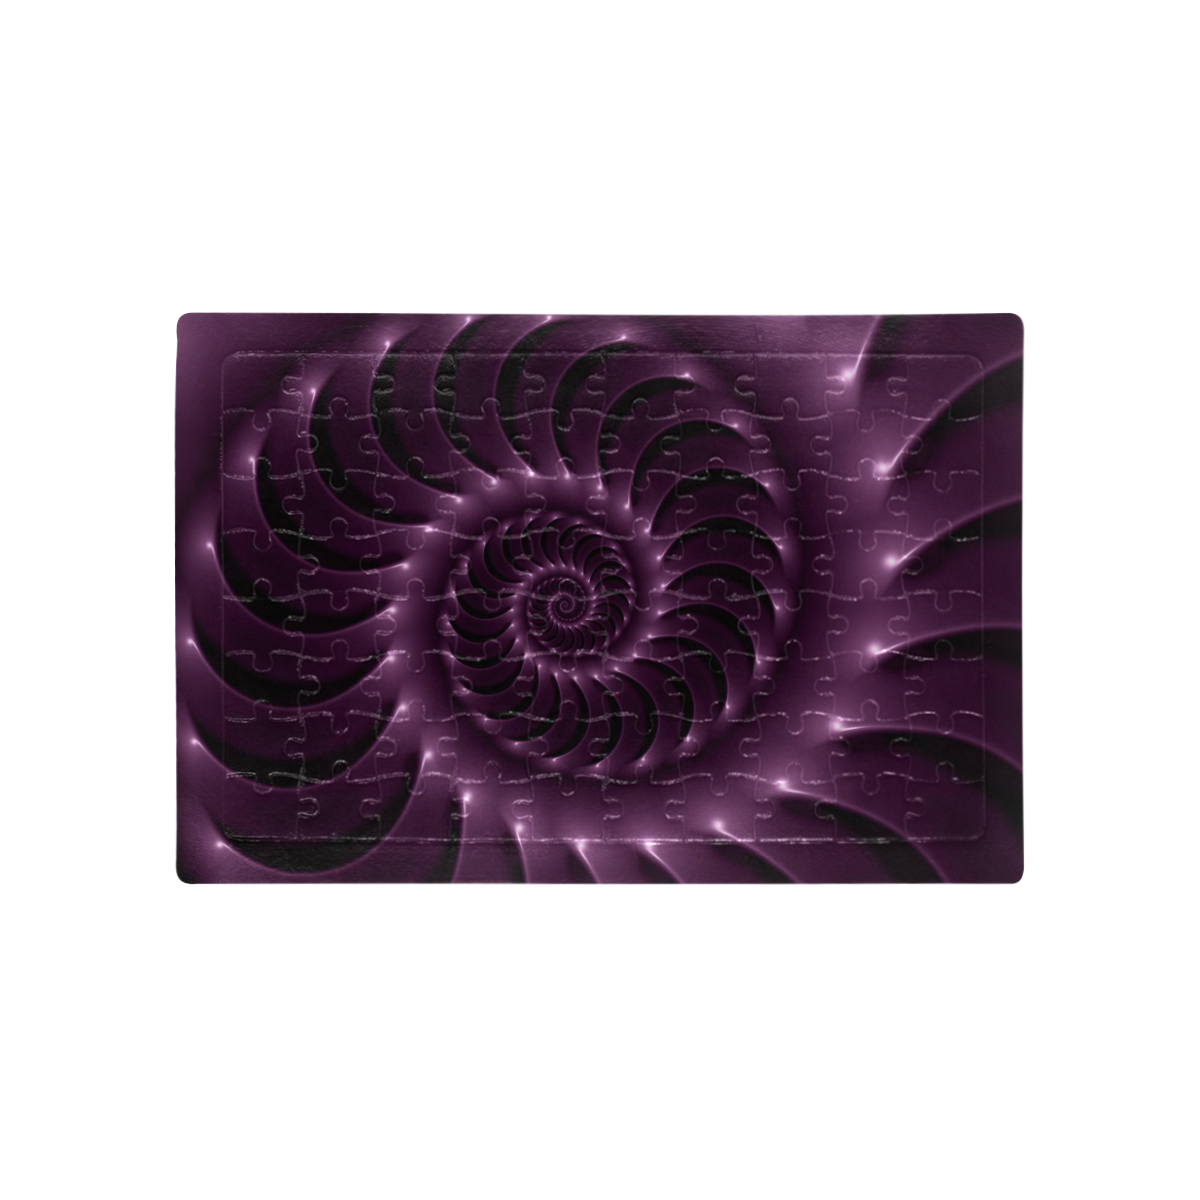 Purple Spiral Fractal Puzzle A4 Size Jigsaw Puzzle (Set of 80 Pieces)